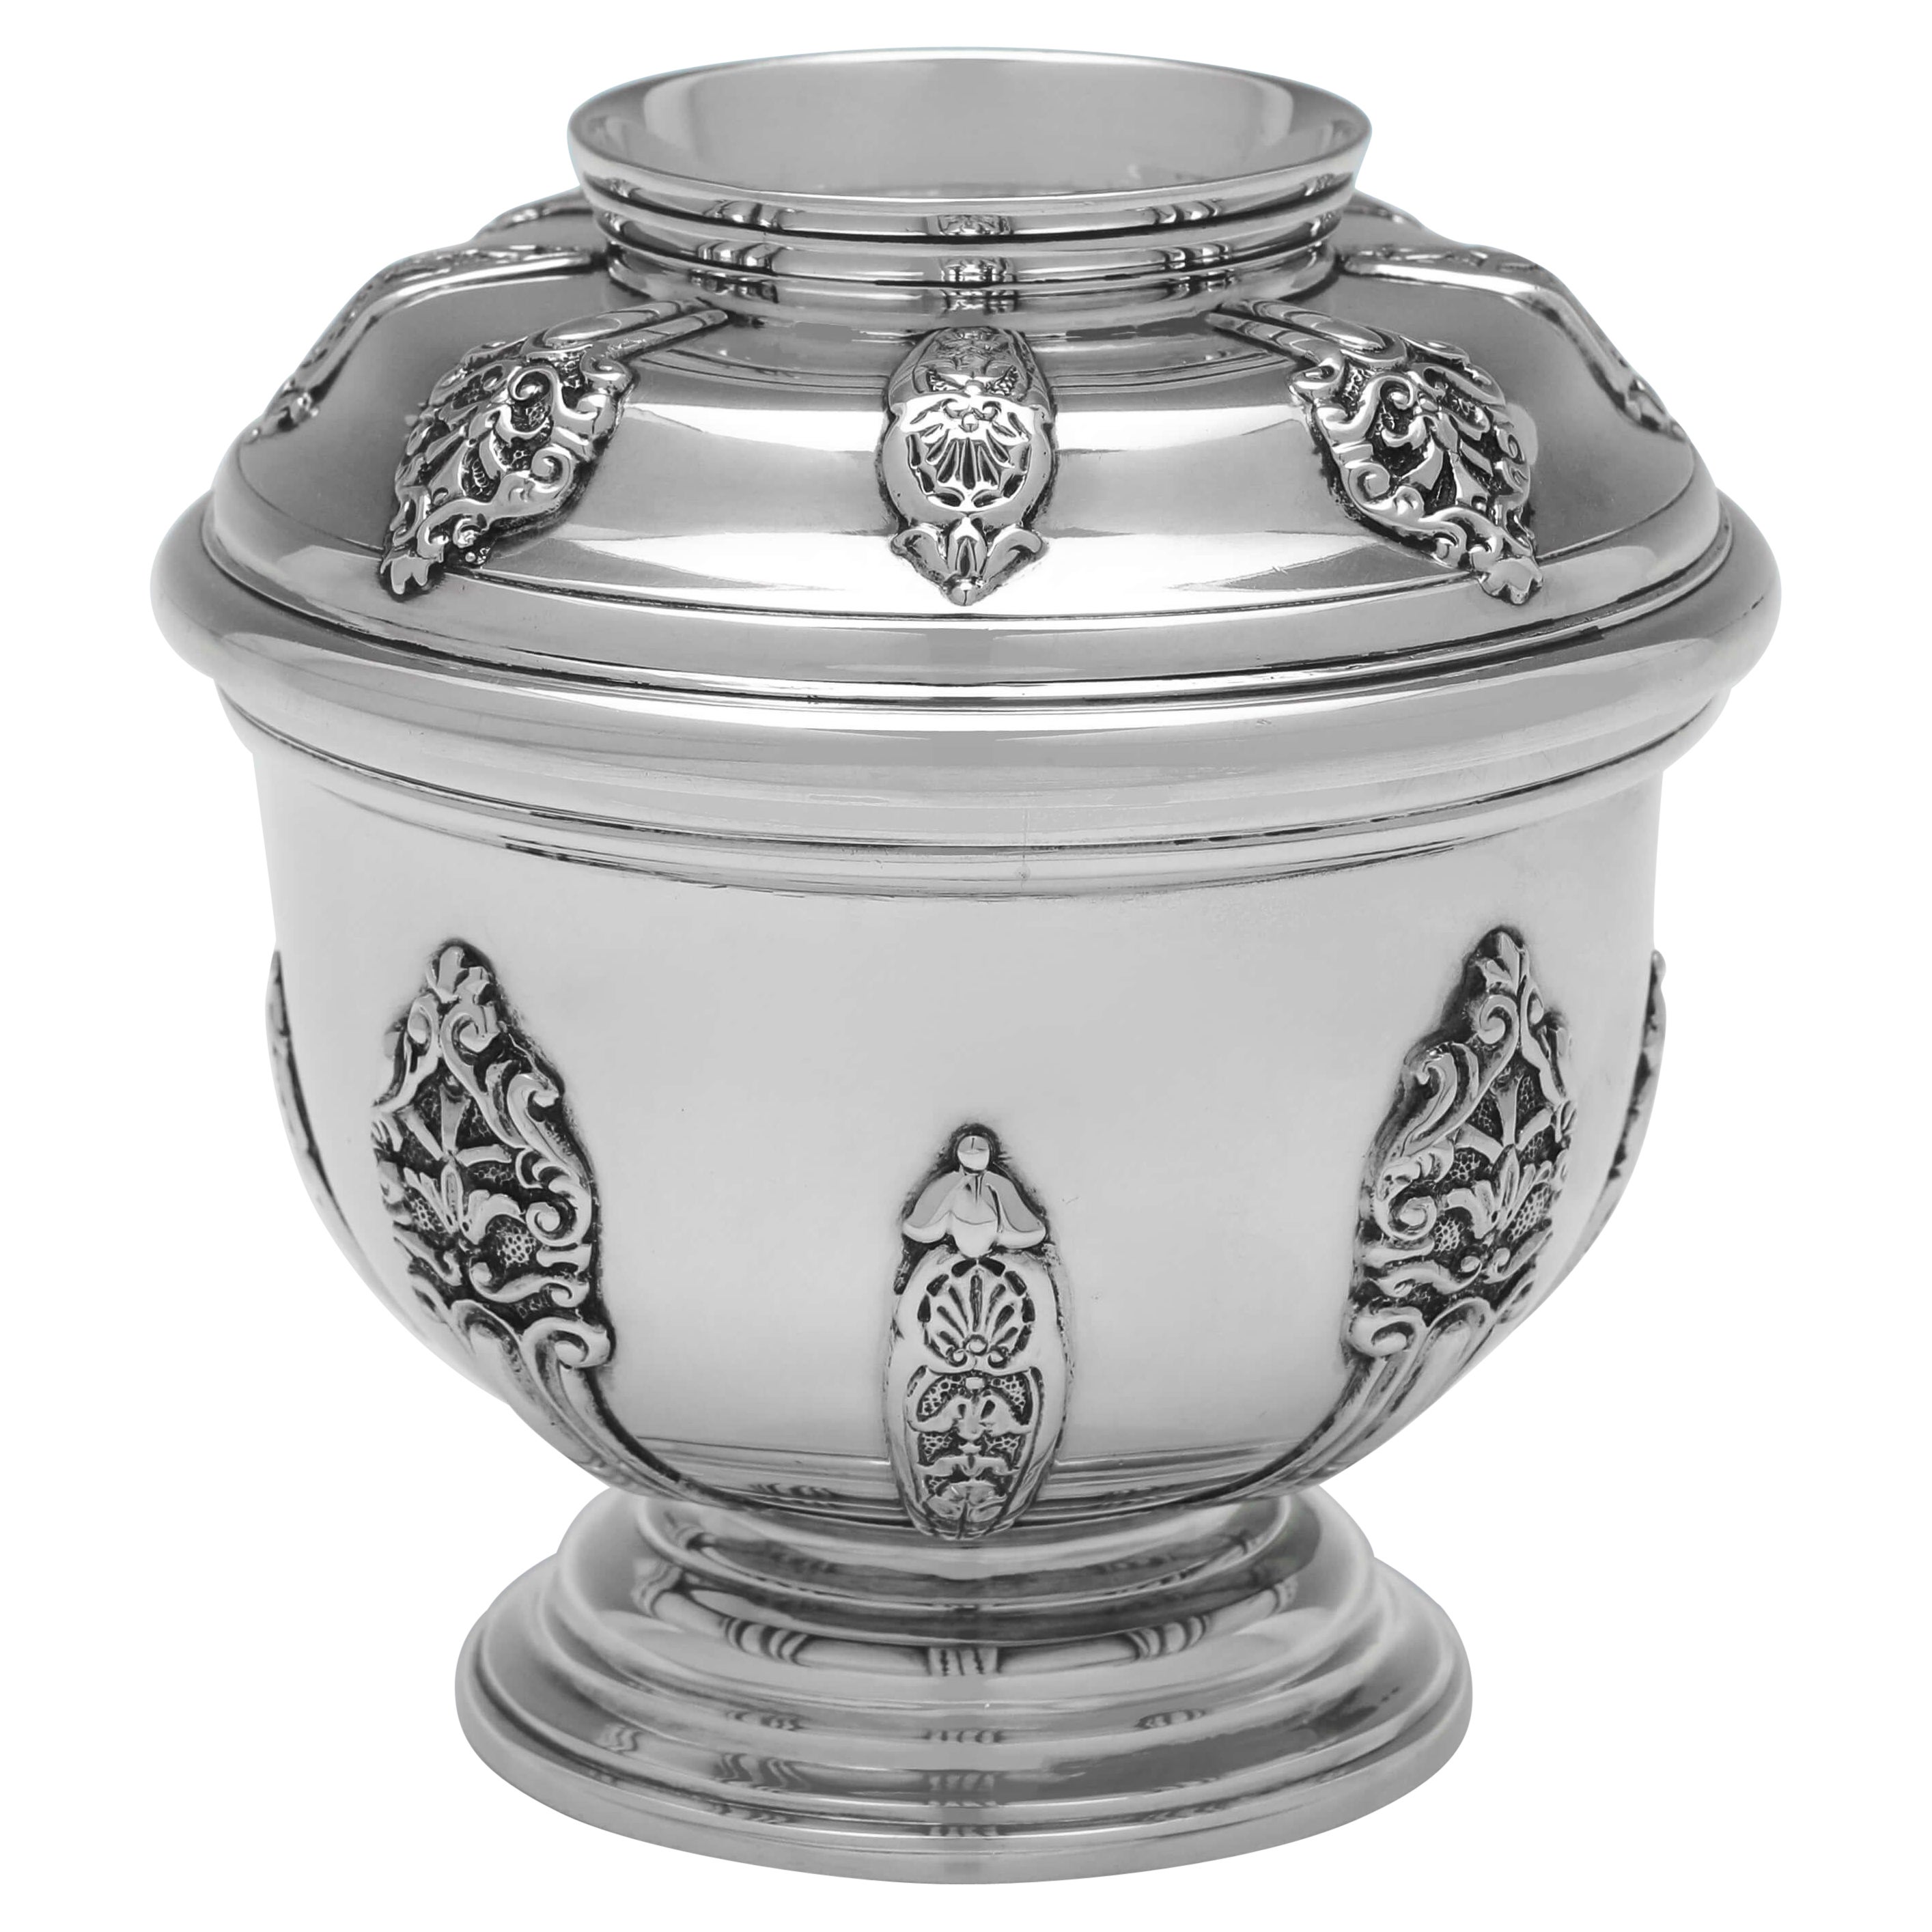 Antique Sterling Silver Sugar Bowl With Lid - Vanders 1906 - George II Design For Sale